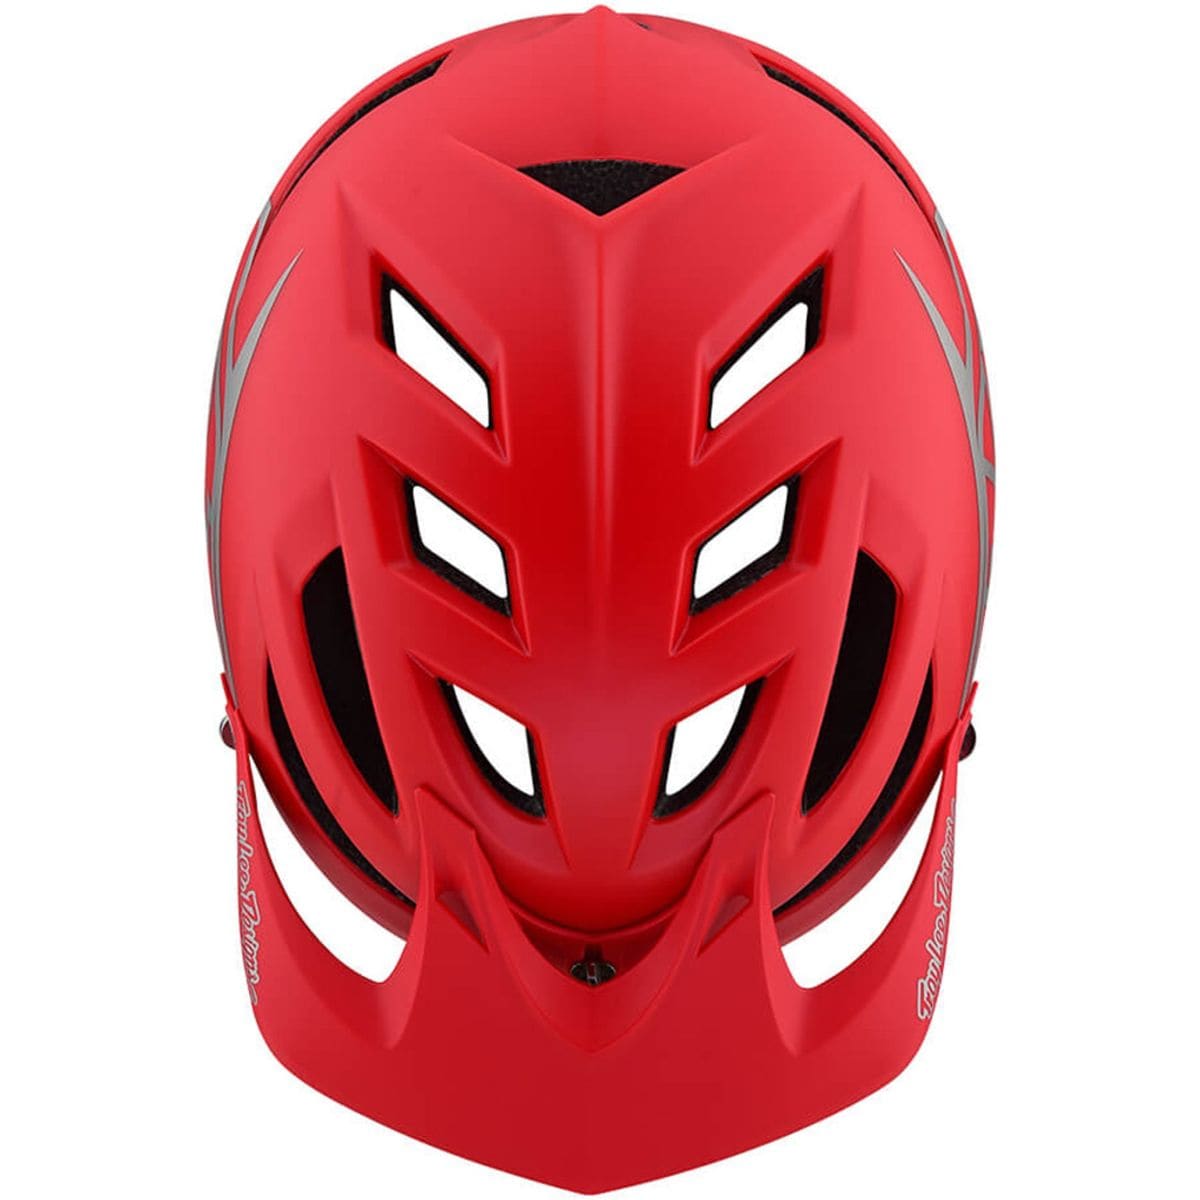 Troy Lee Designs A1 Classic Mips helmet LordGun online bike store